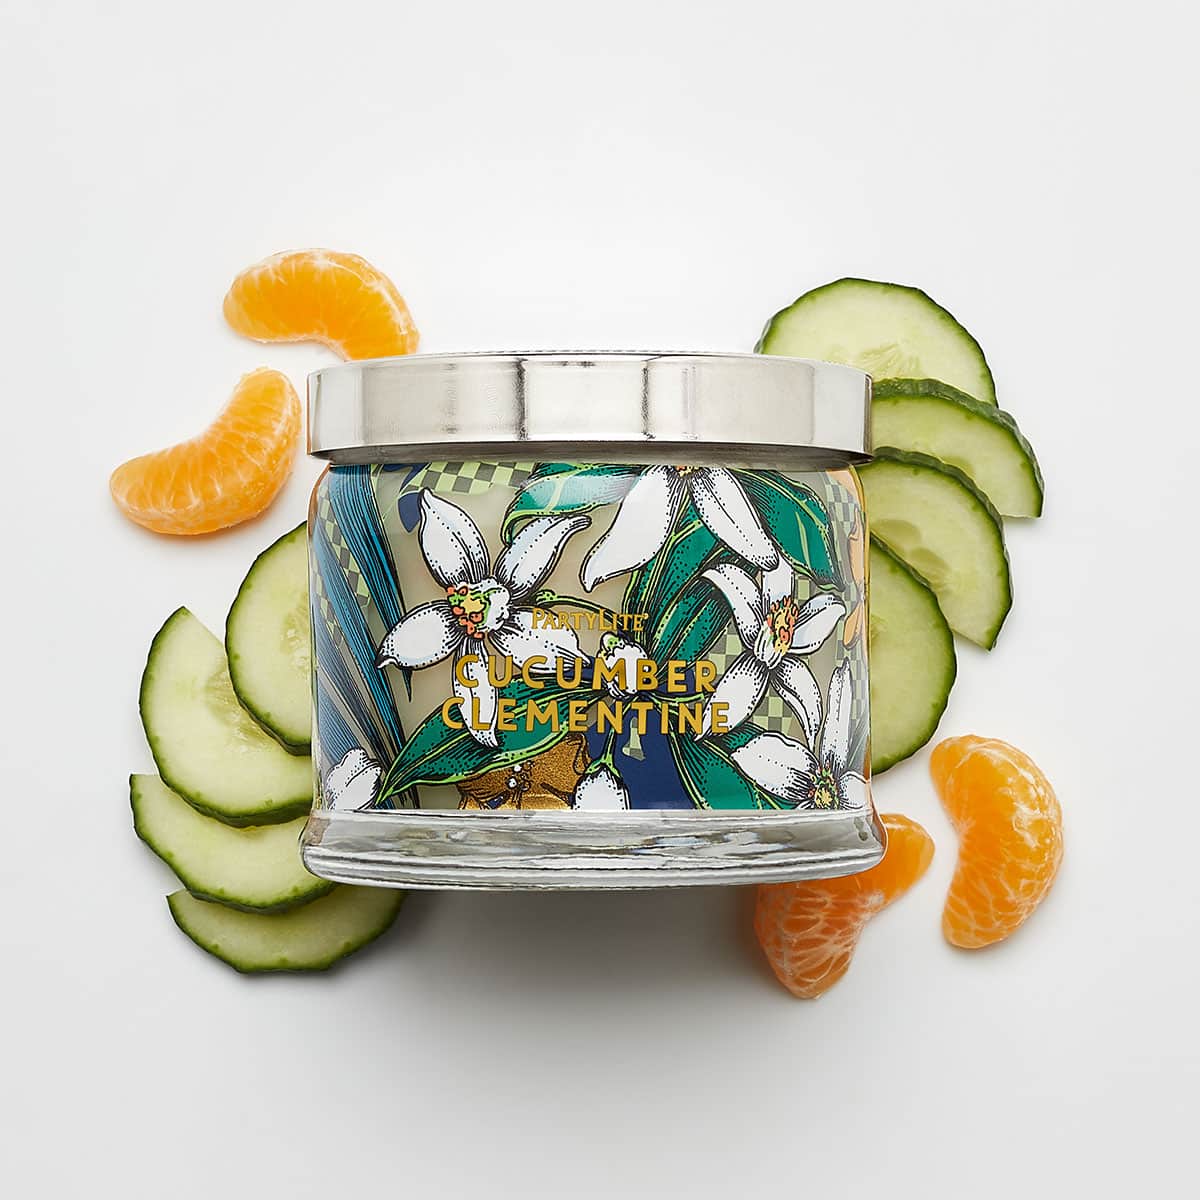 Cucumber Clementine 3-Wick Jar Candle